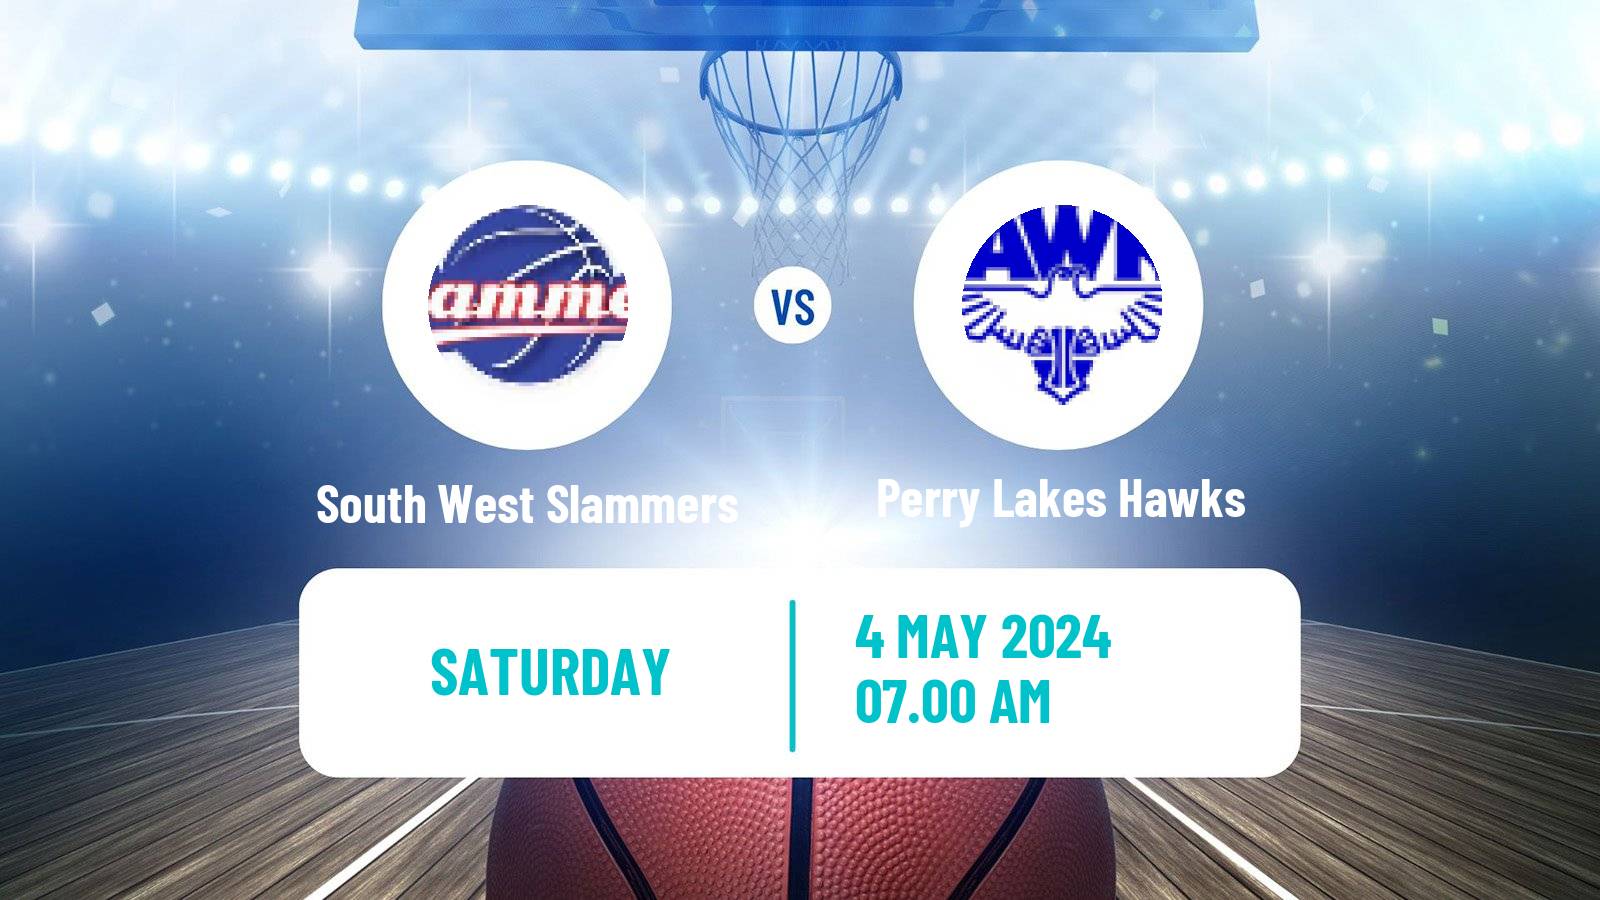 Basketball Australian NBL1 West South West Slammers - Perry Lakes Hawks